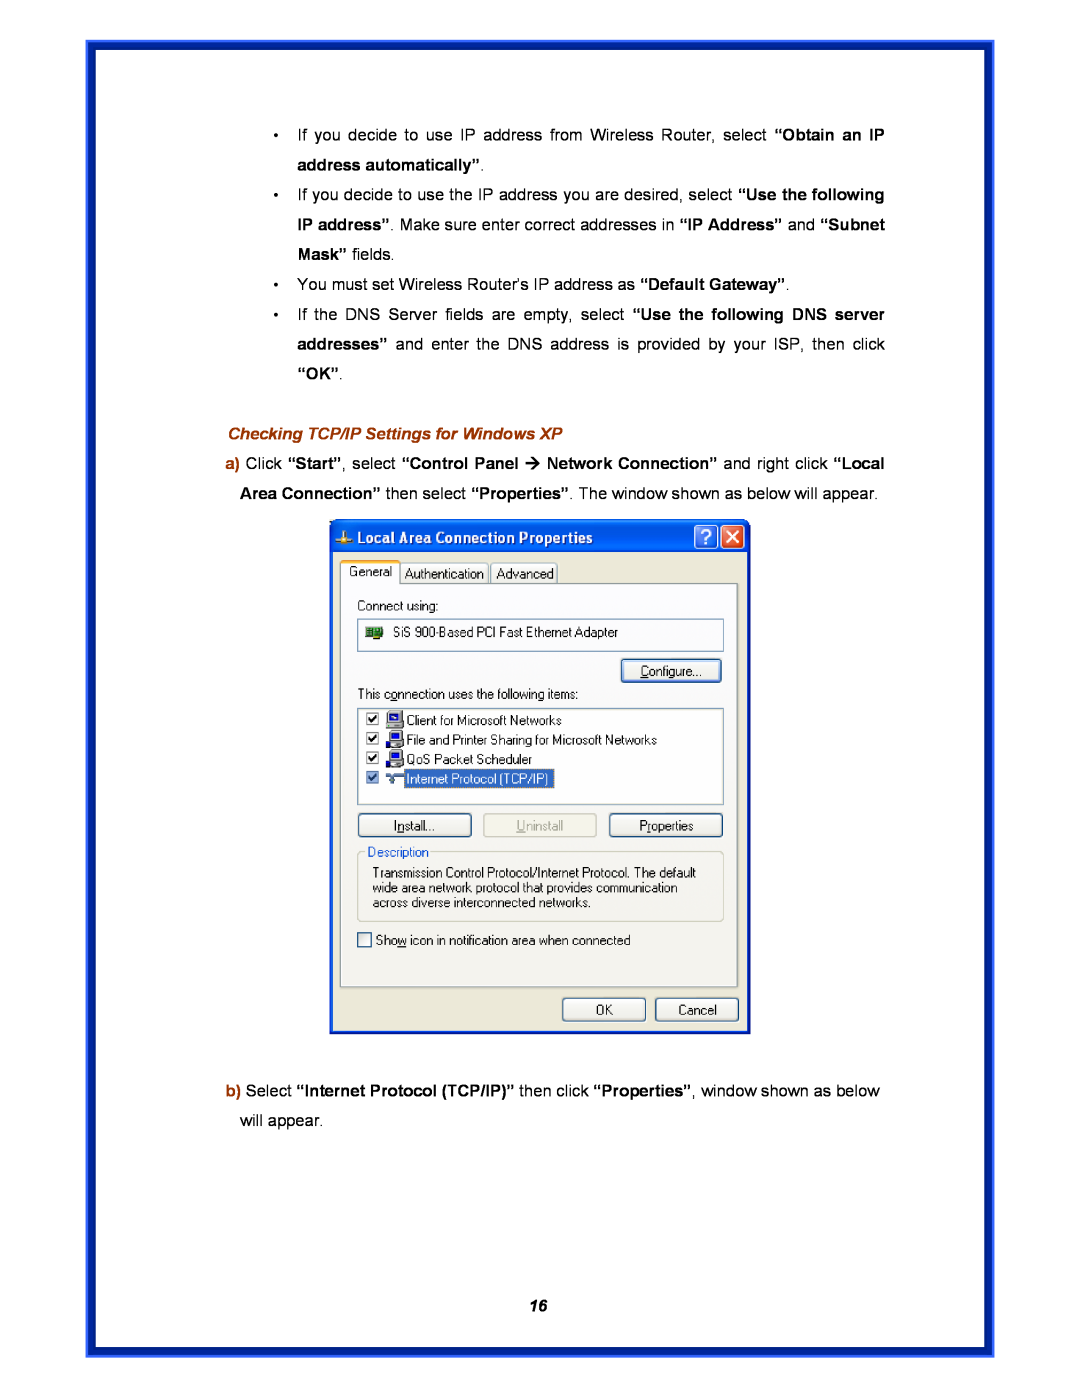 Advantek Networks AWR-MIMO-54RA user manual Checking TCP/IP Settings for Windows XP 